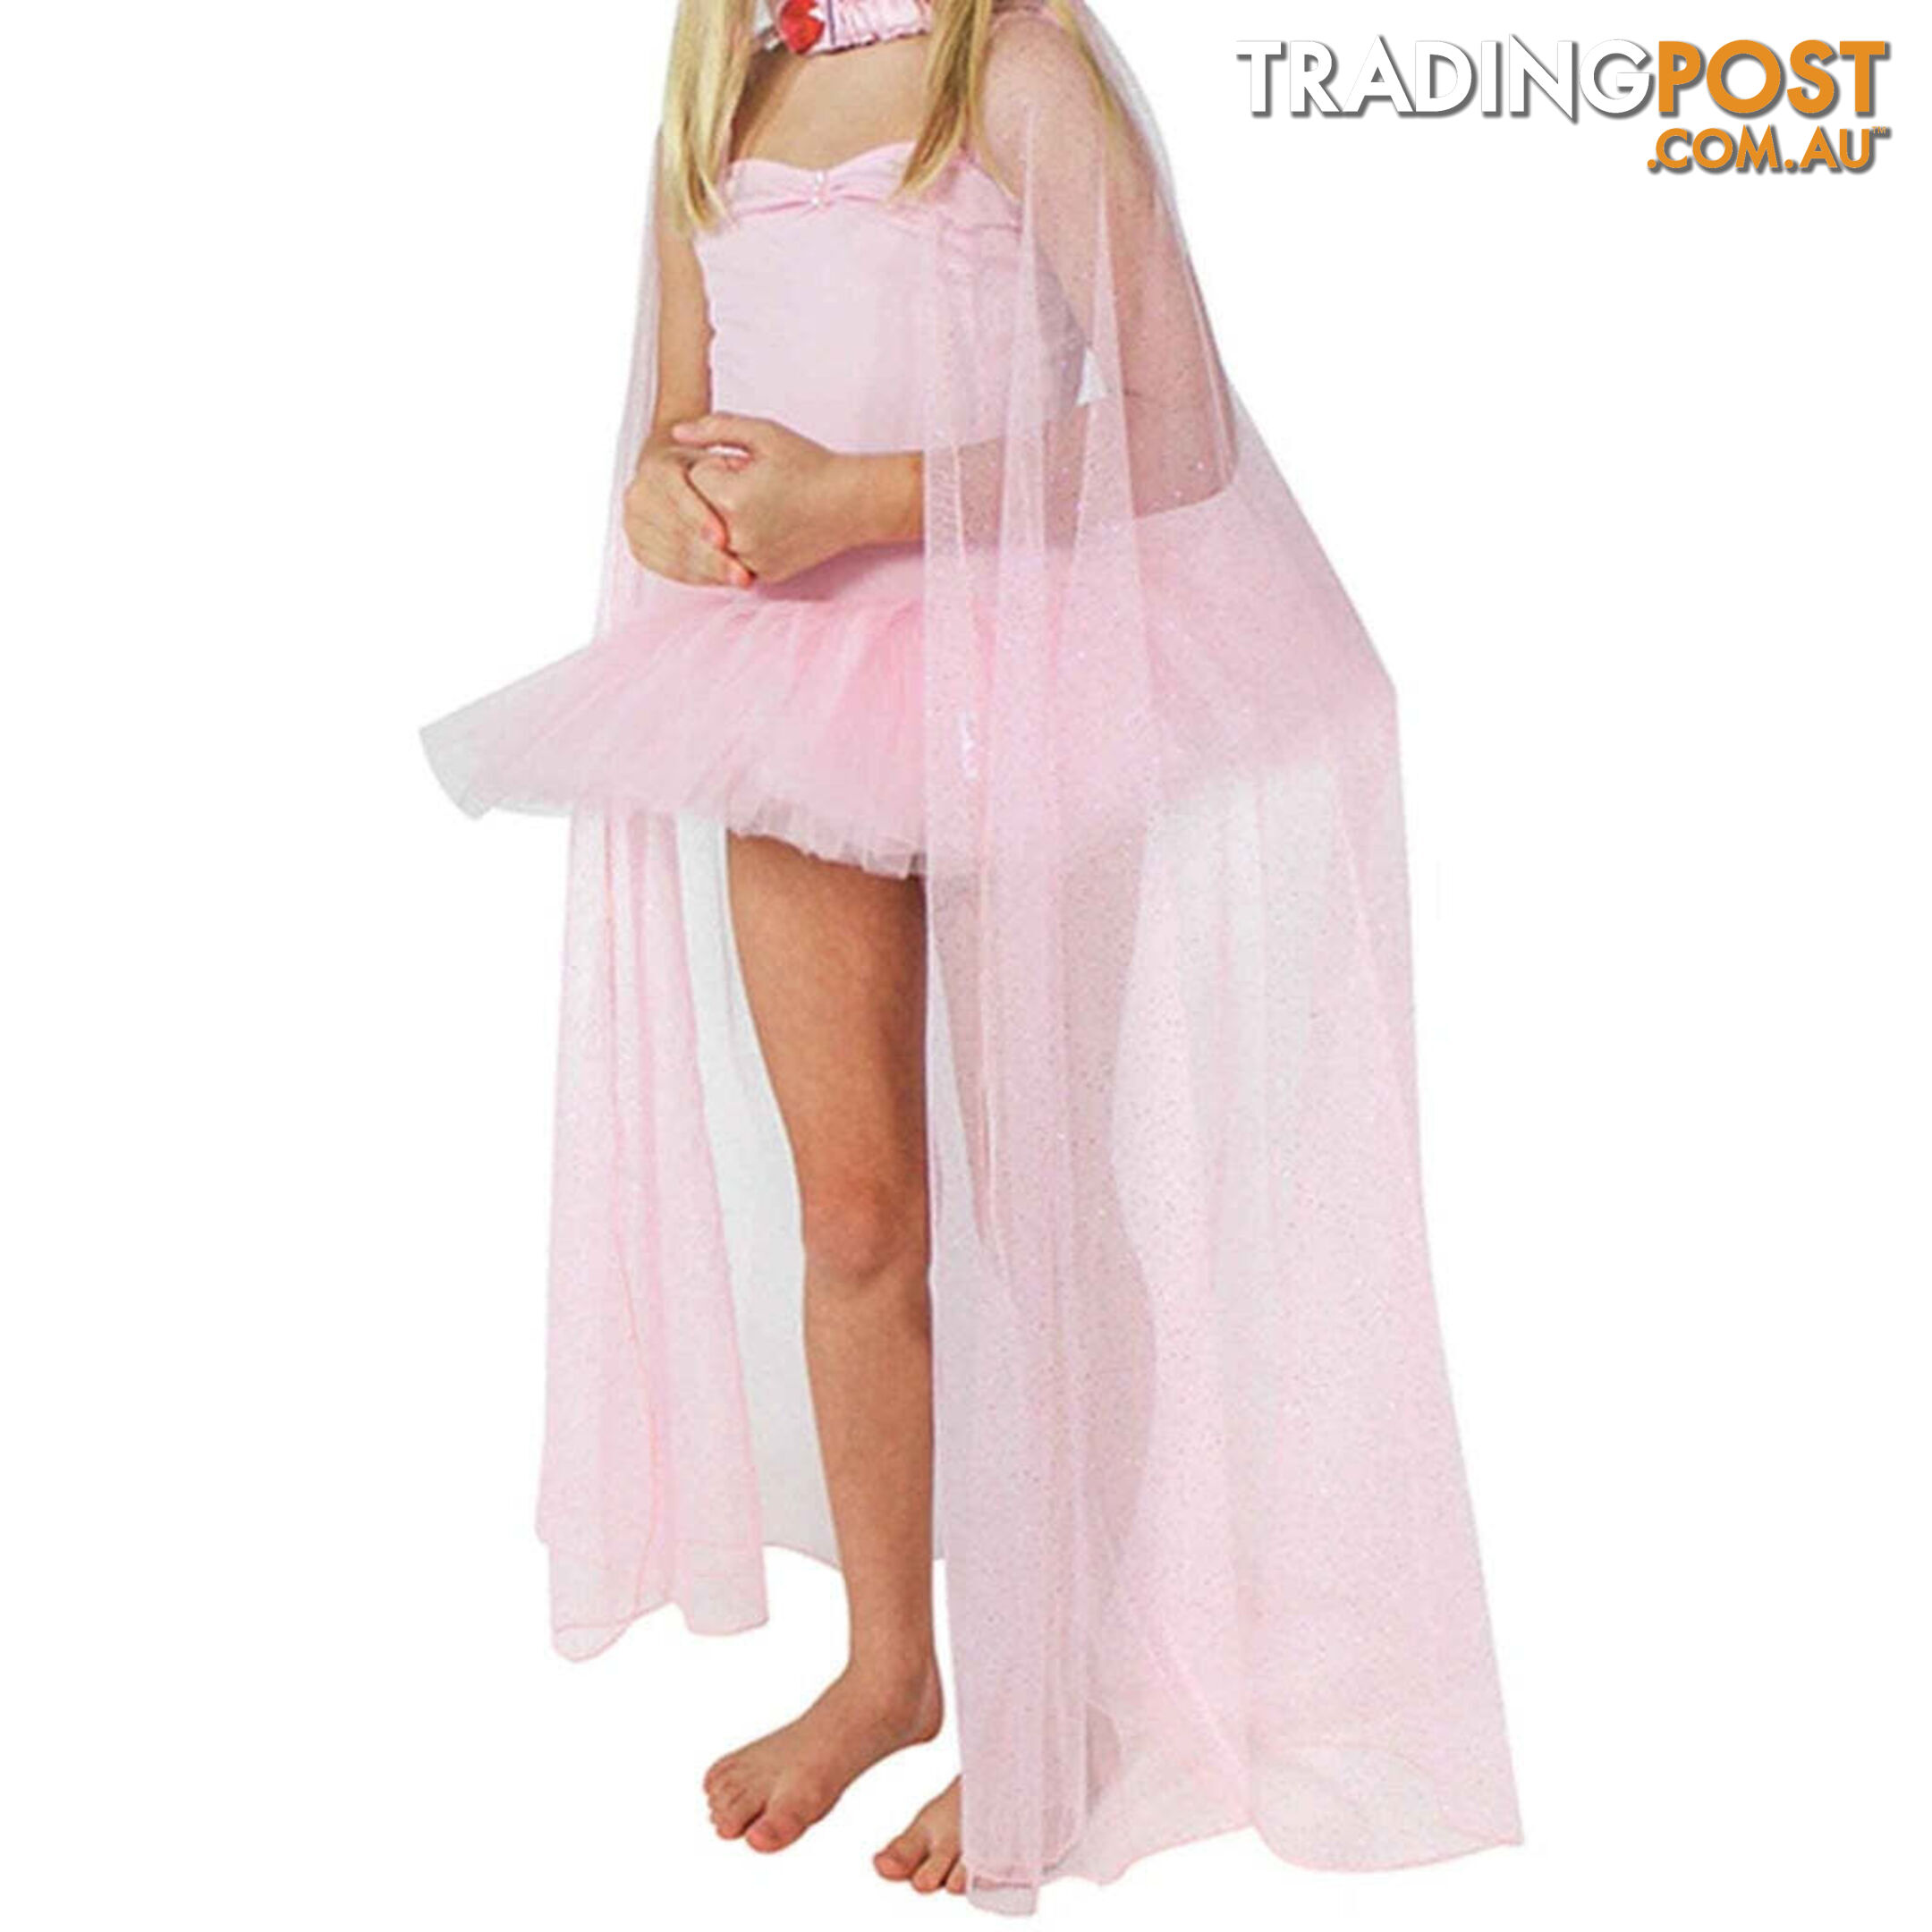 Fairy Girls - Costume Glittery Princess Bling Cape Light Pink - Fgf442lp - 9787302004424